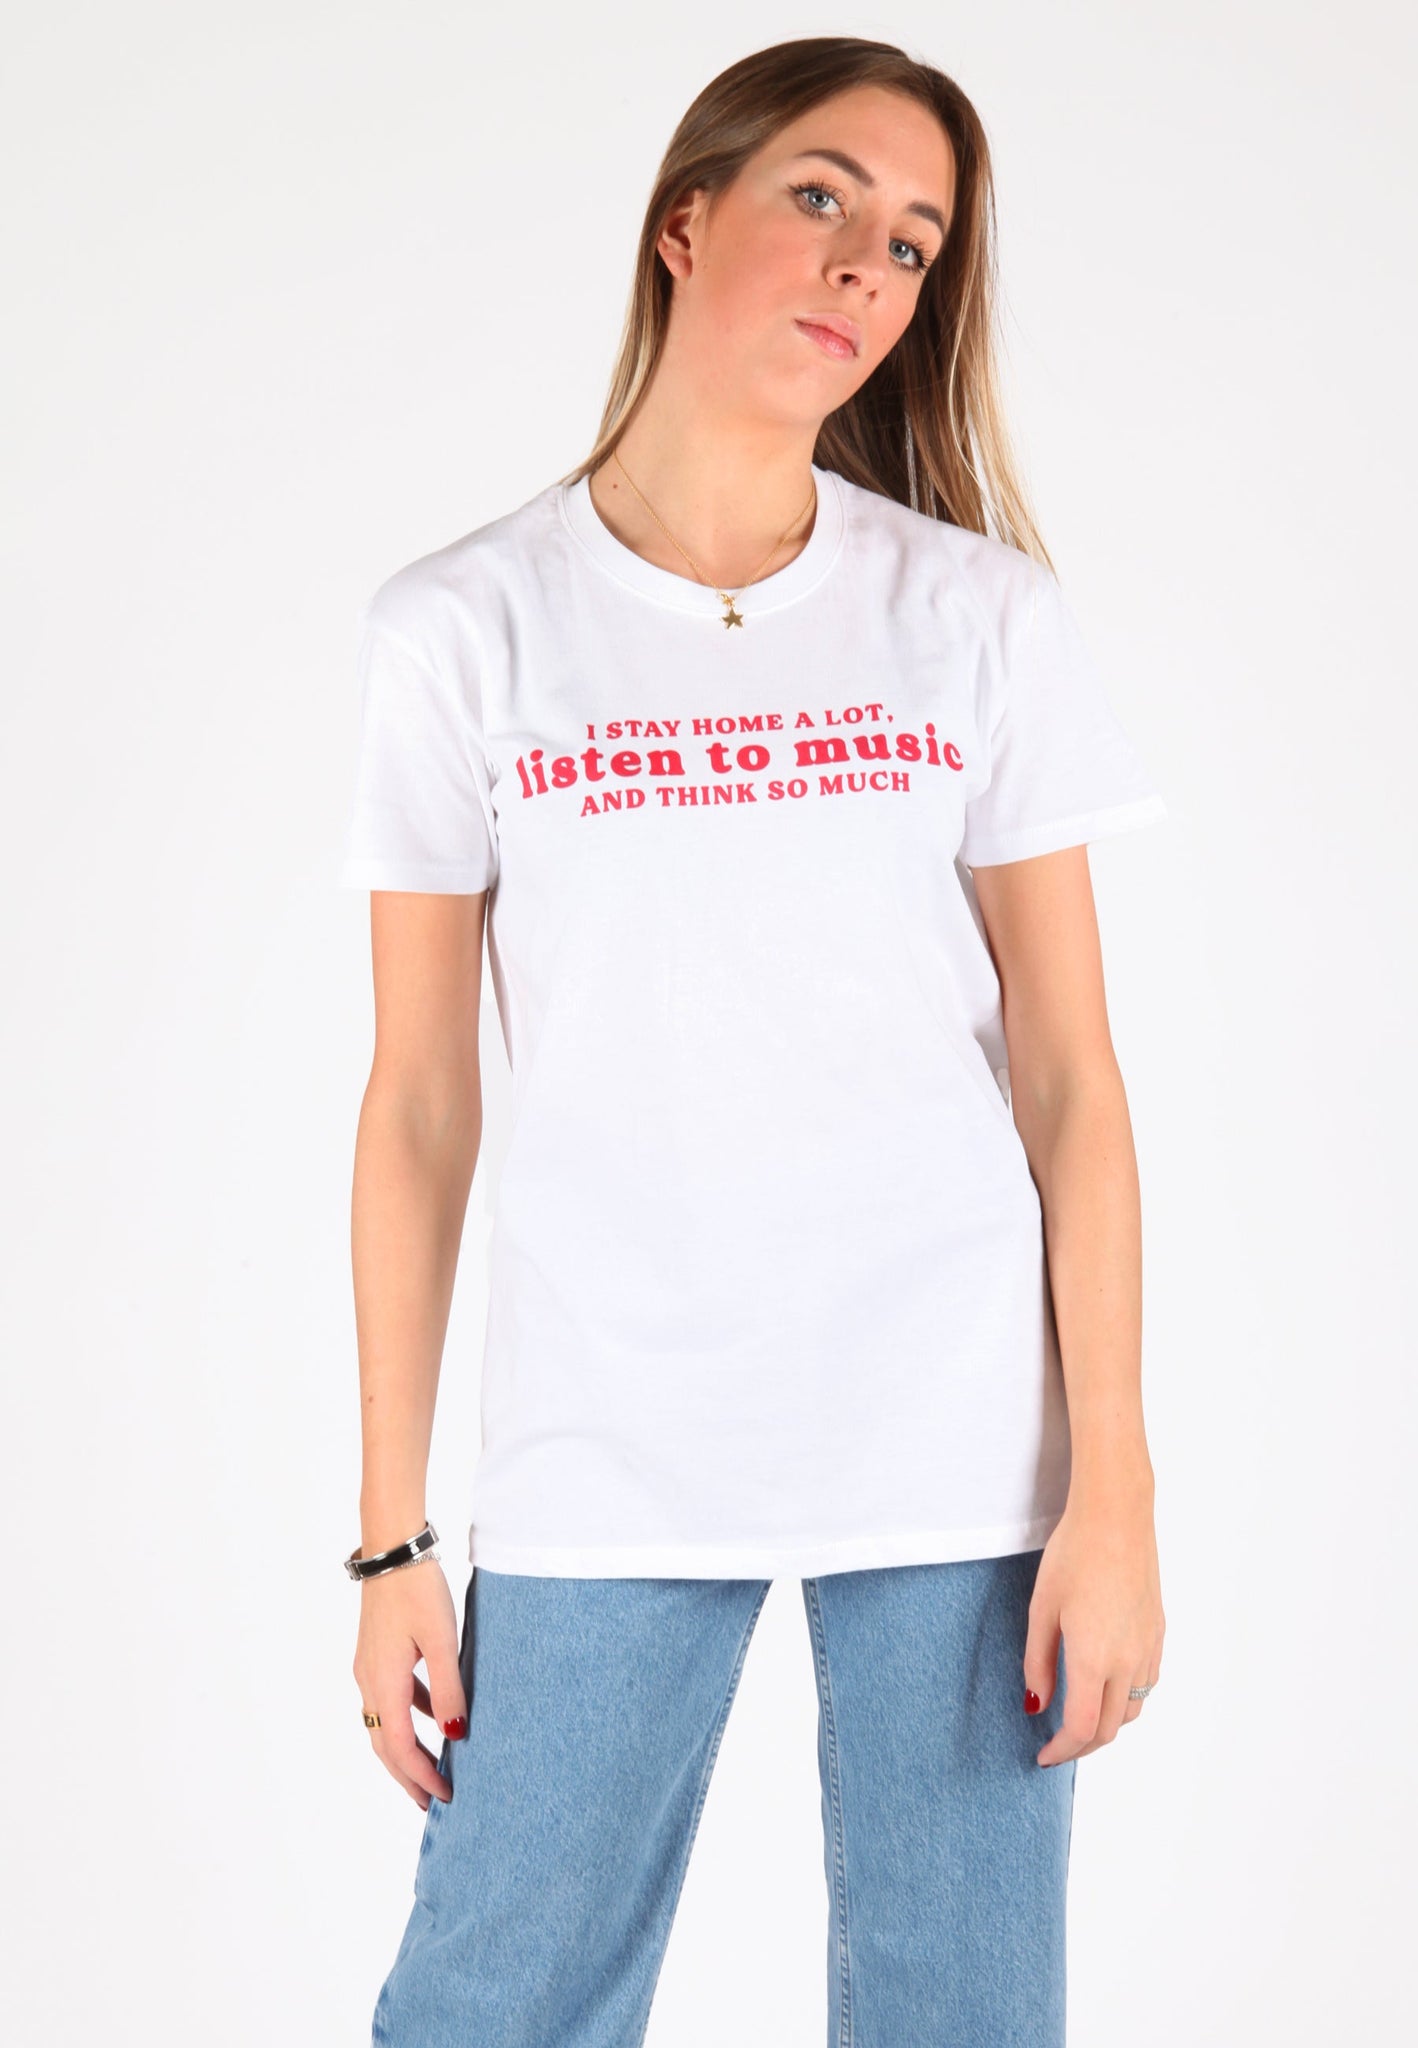 Camiseta Donna "Hogar, música y pensar" 